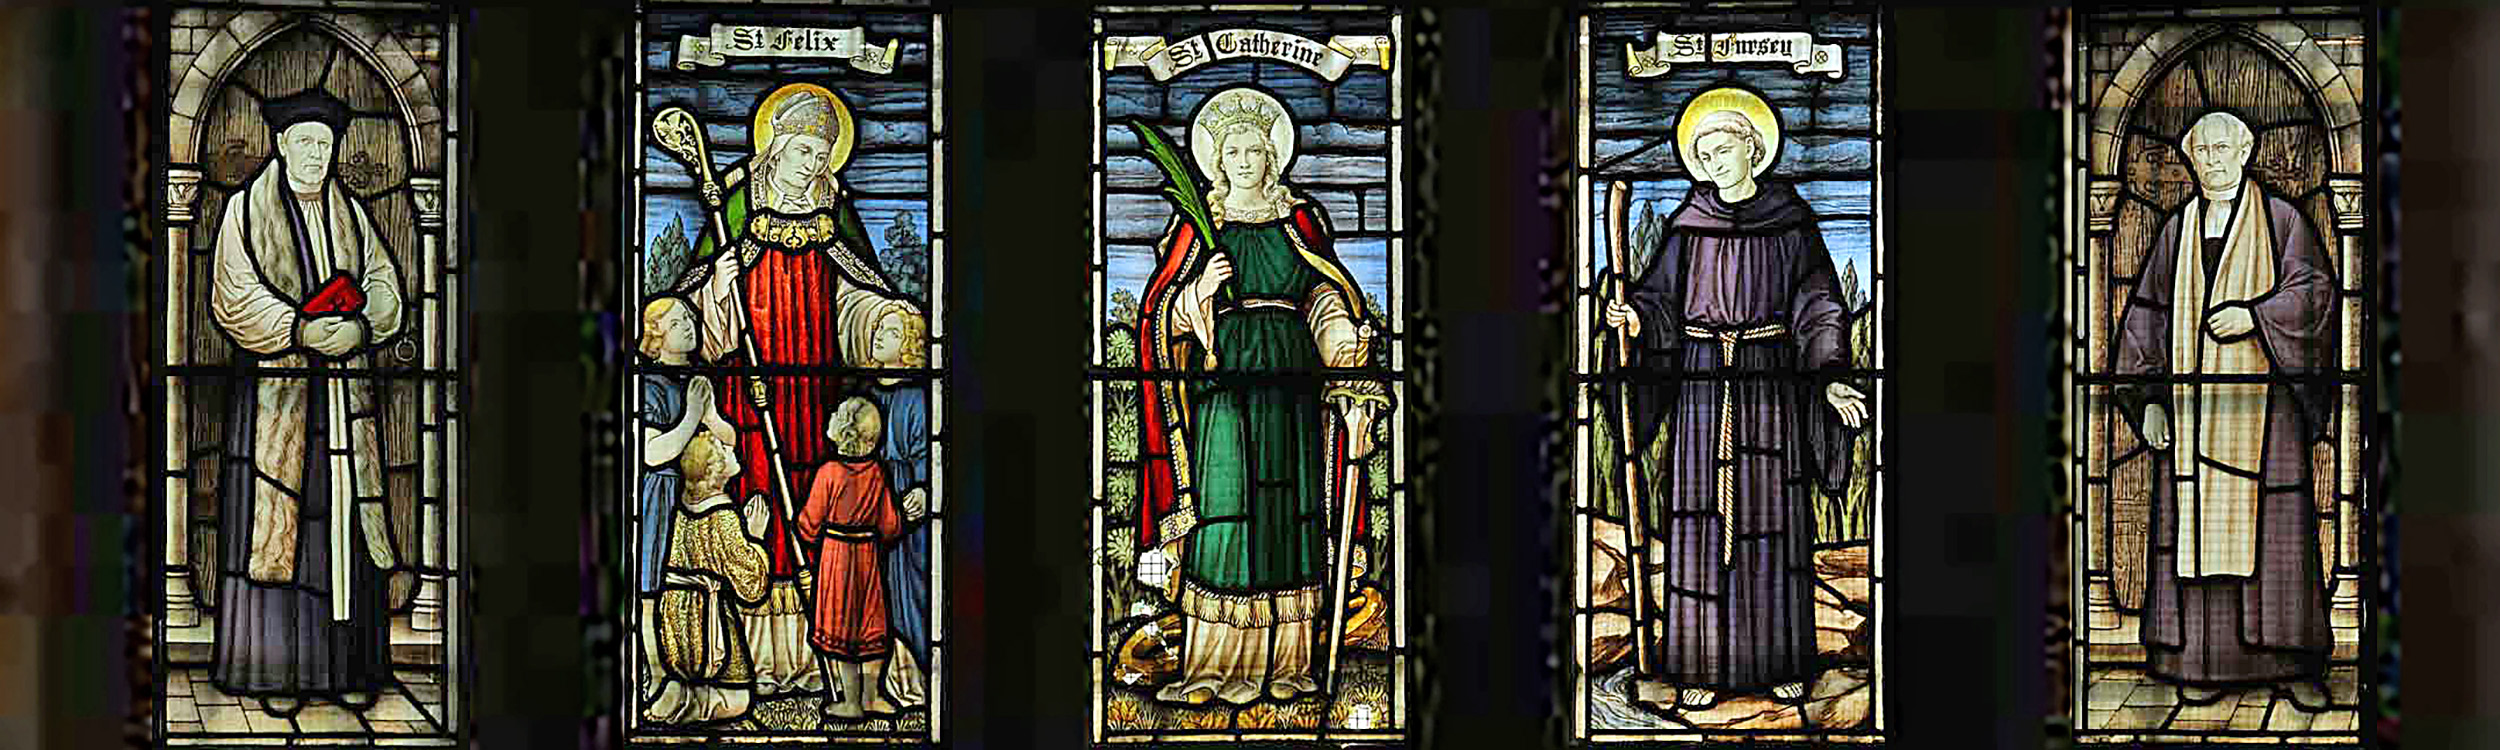 St Catherines baptistery window